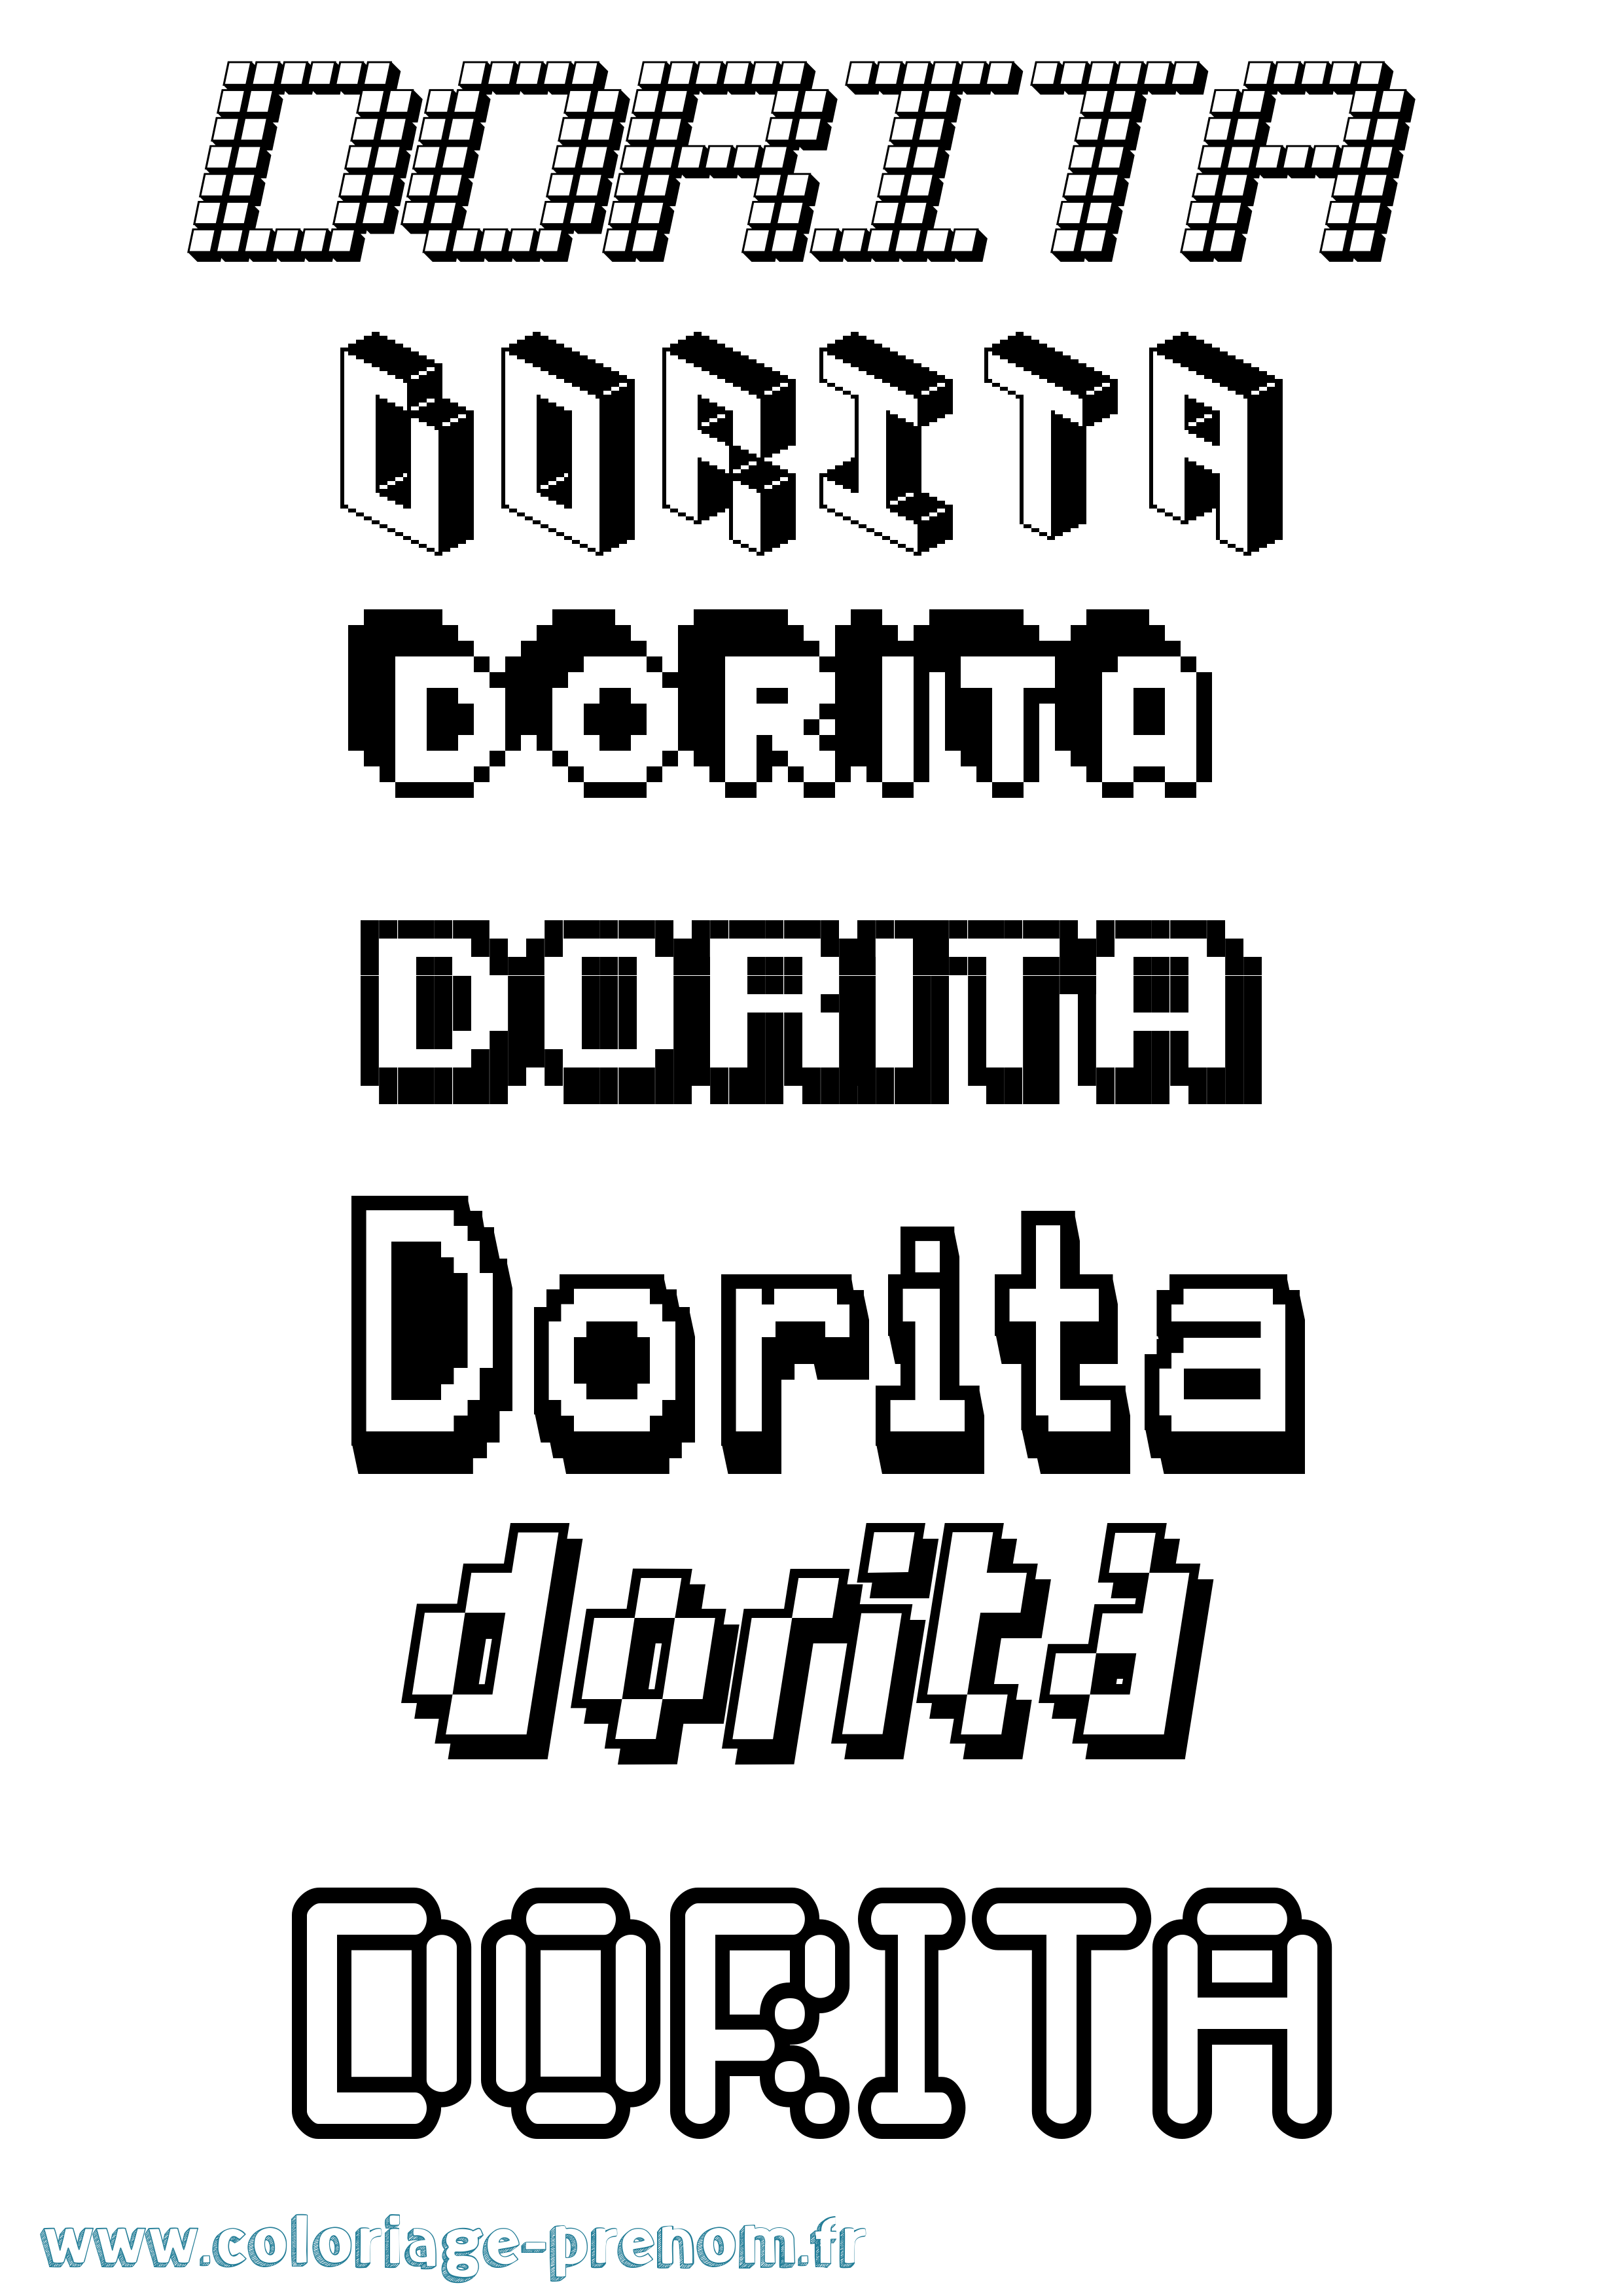 Coloriage prénom Dorita Pixel